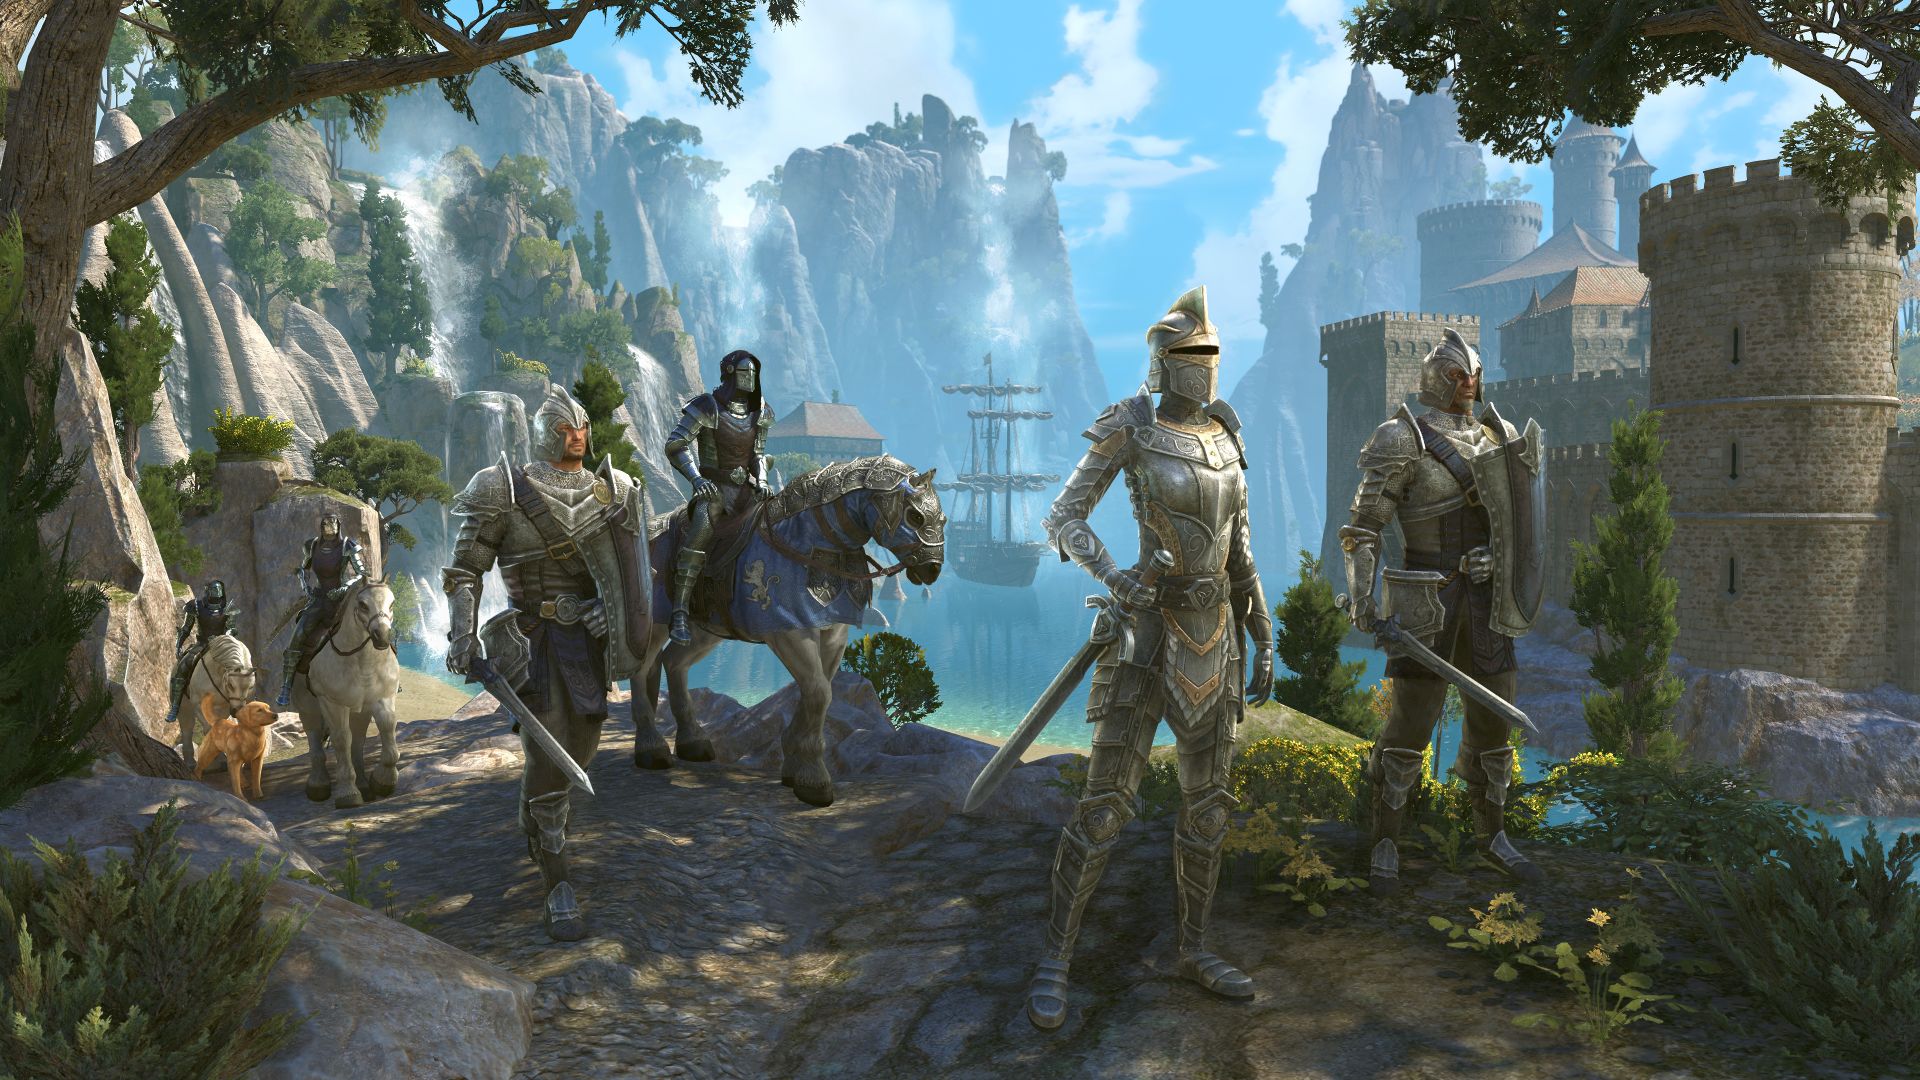 The Elder Scrolls Online heads to High Isle – a never-before-seen region